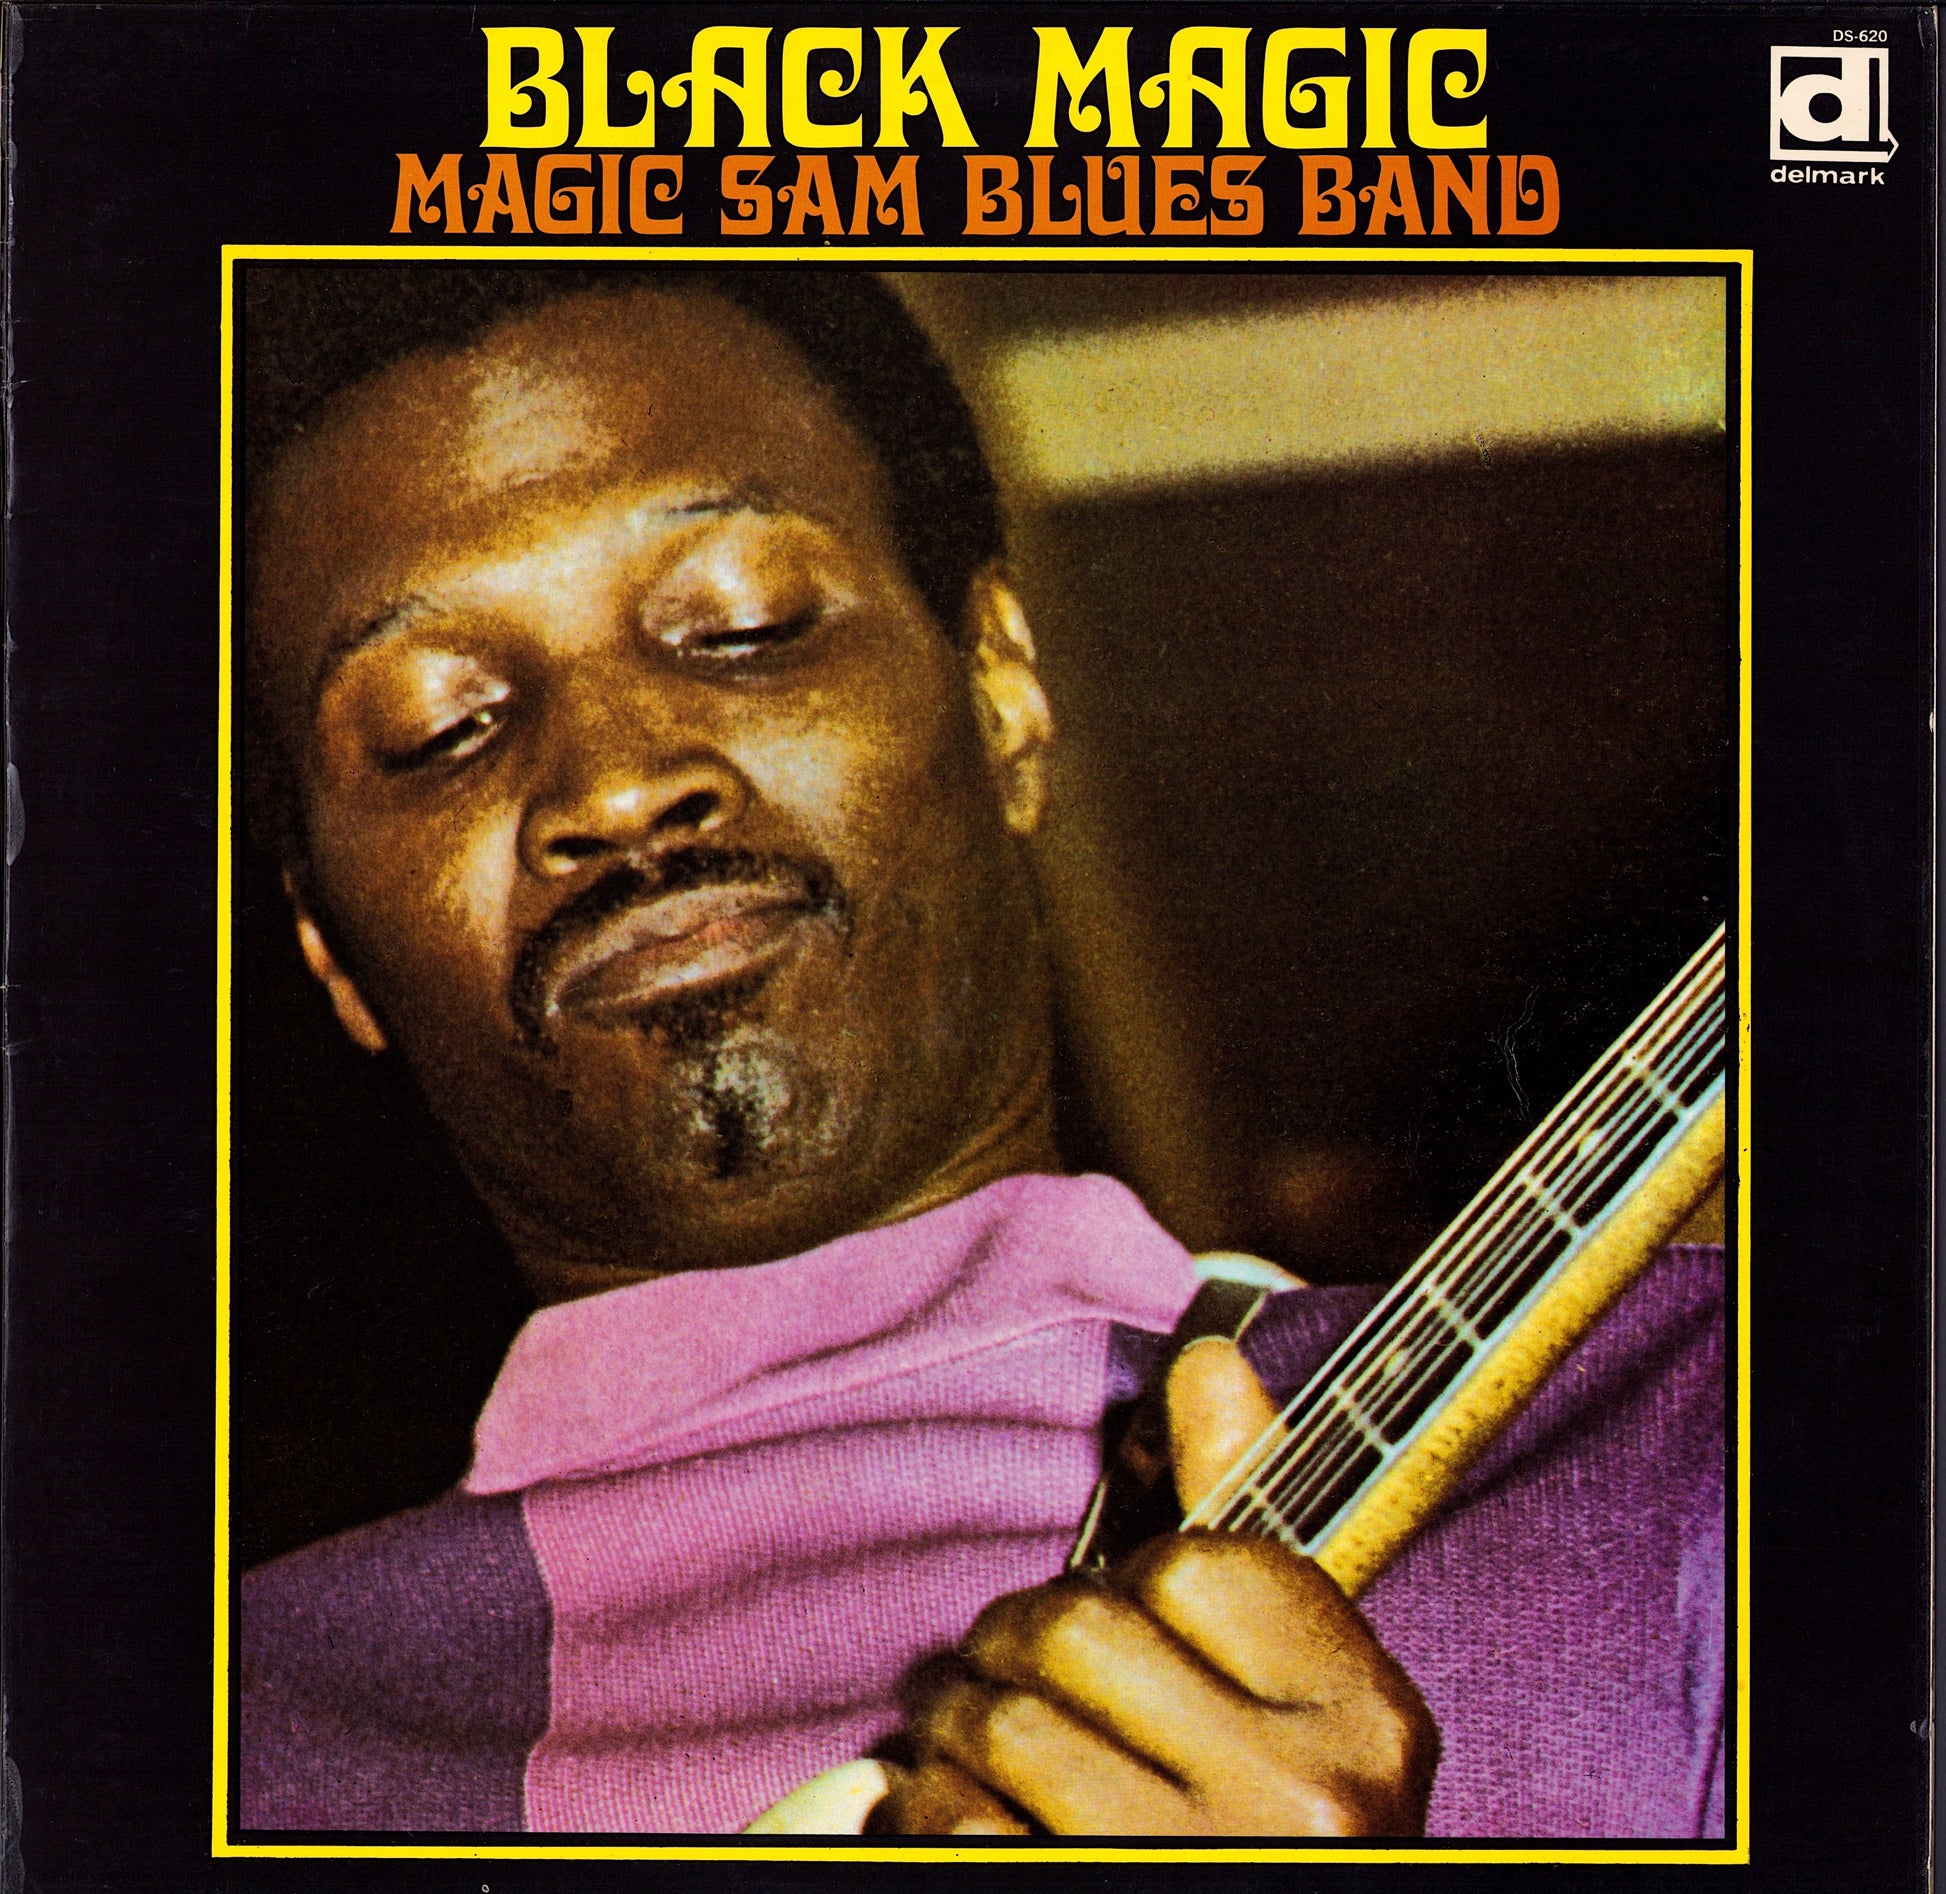 Magic Sam Blues Band ‎- Black Magic (Vinyl LP)